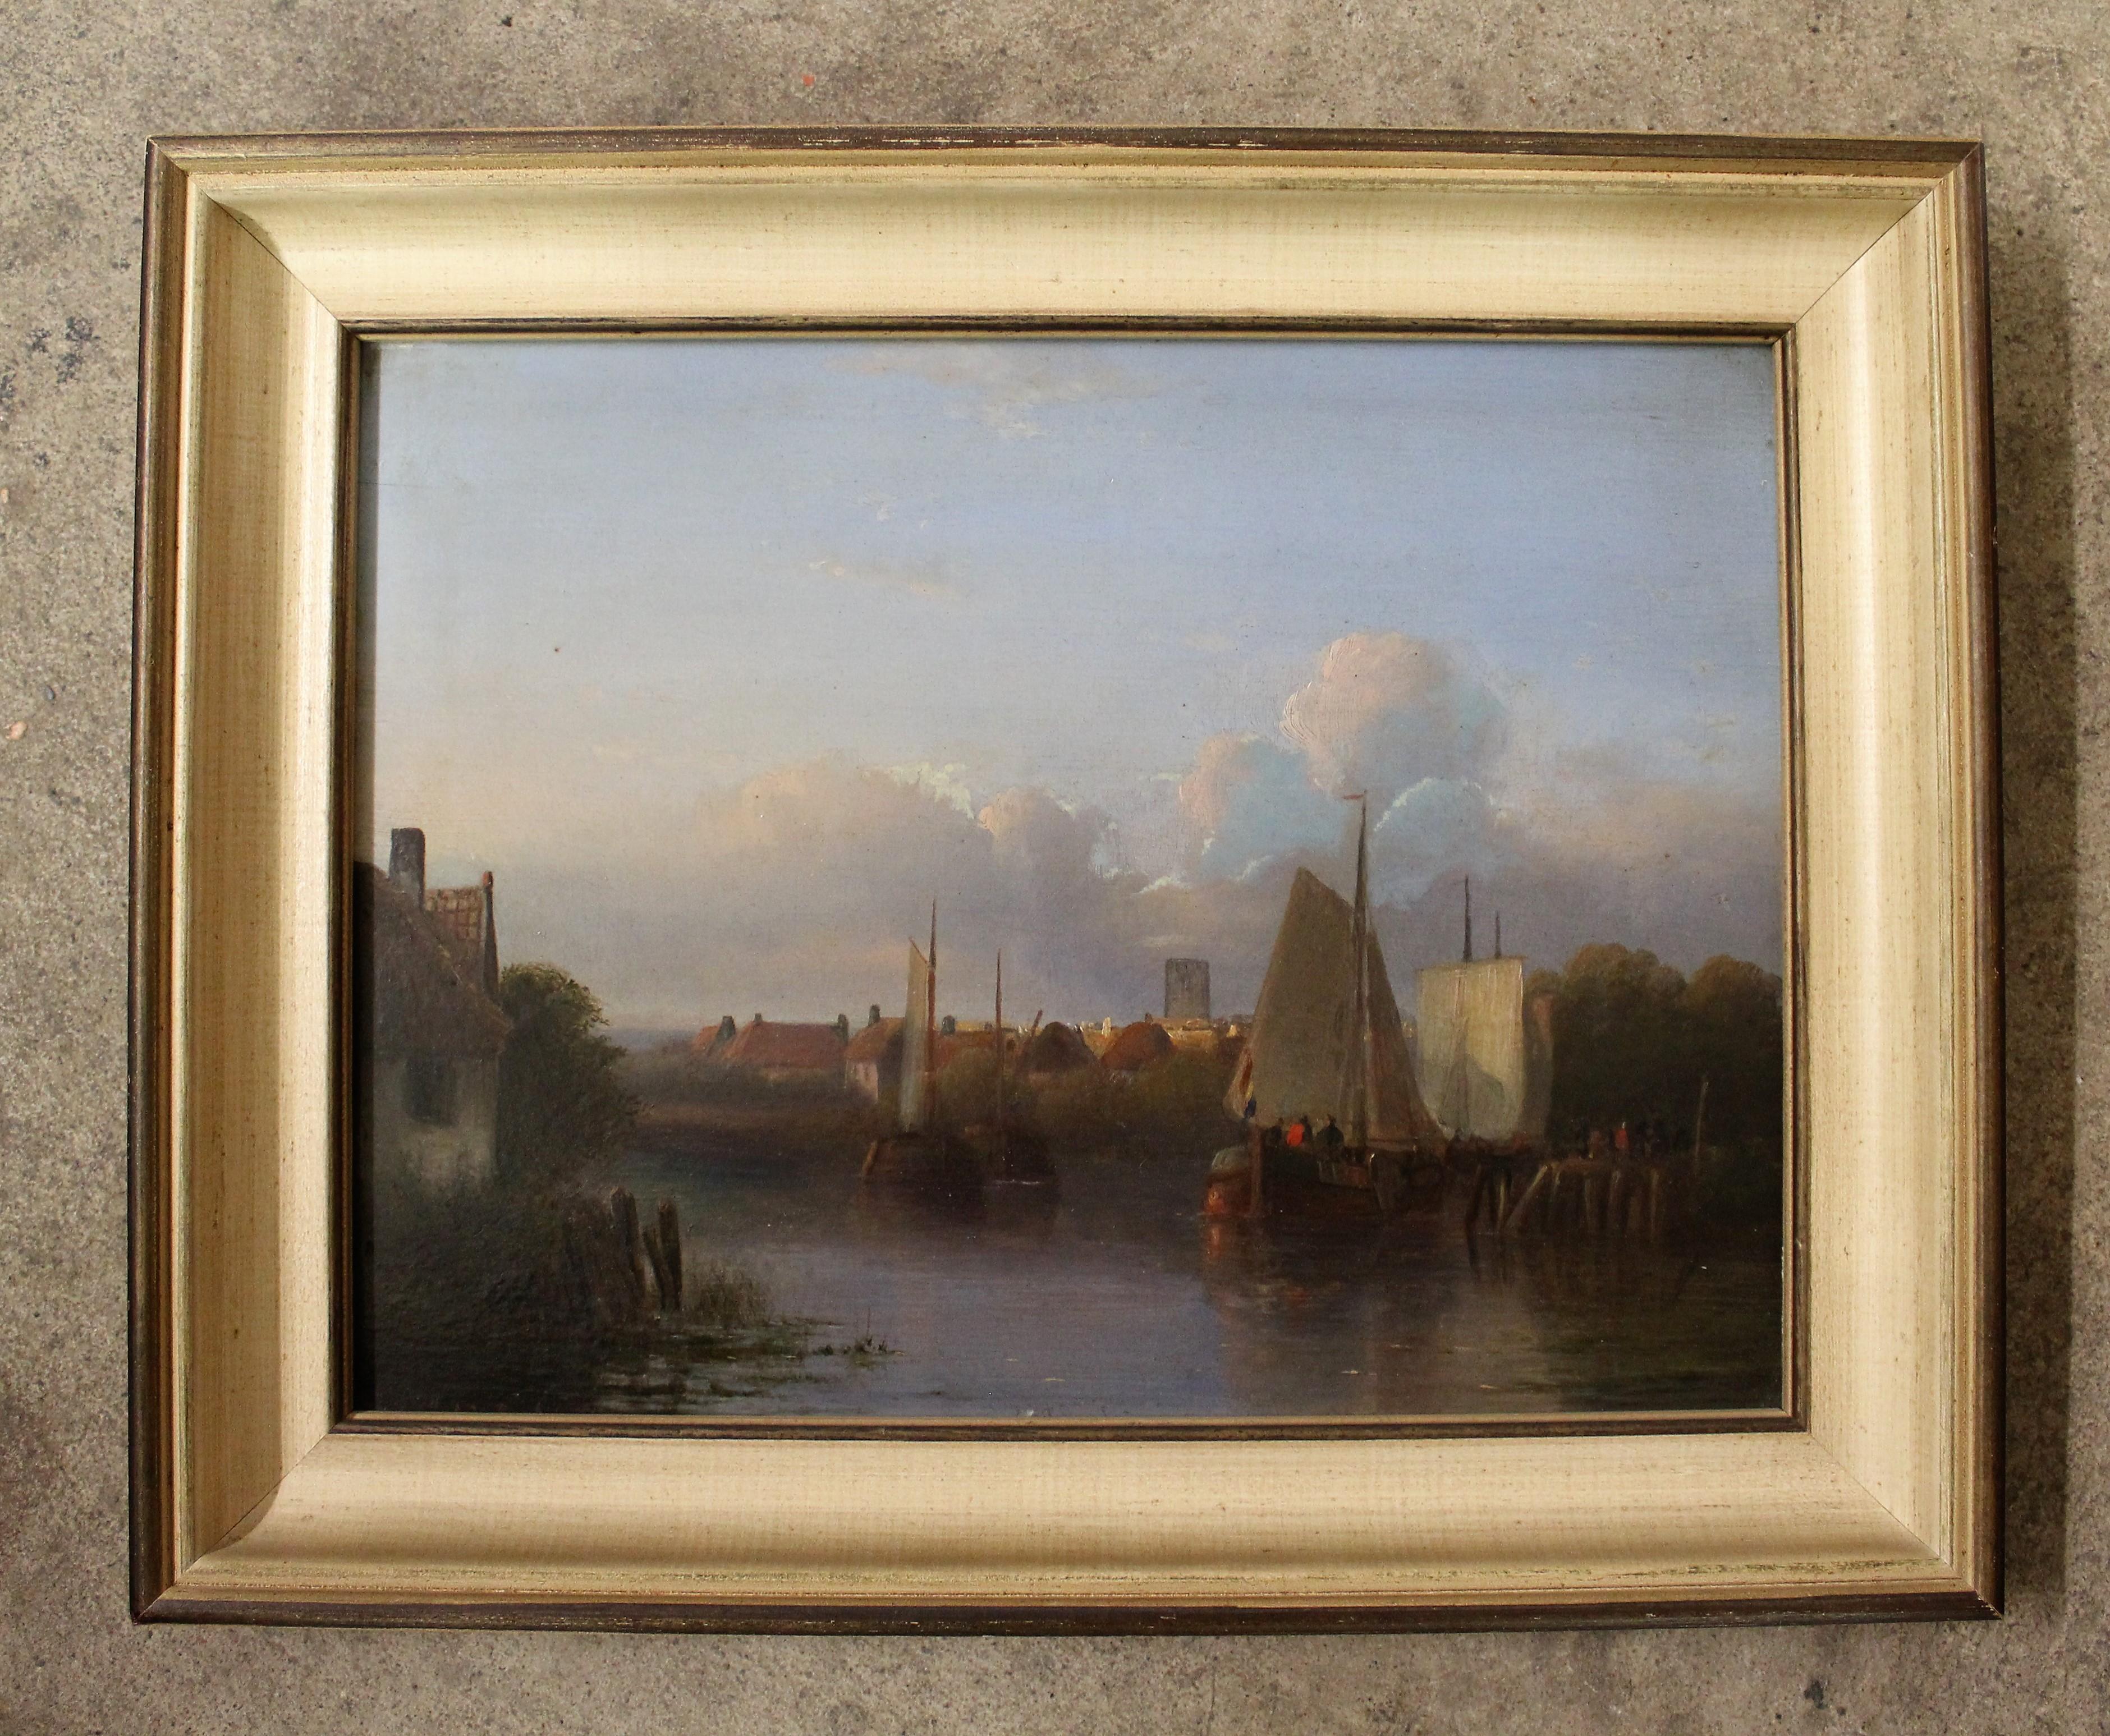 Dominique De Bast (Belgium 1781-1842)
Medium: Oil on panel
Size with frame 16.25